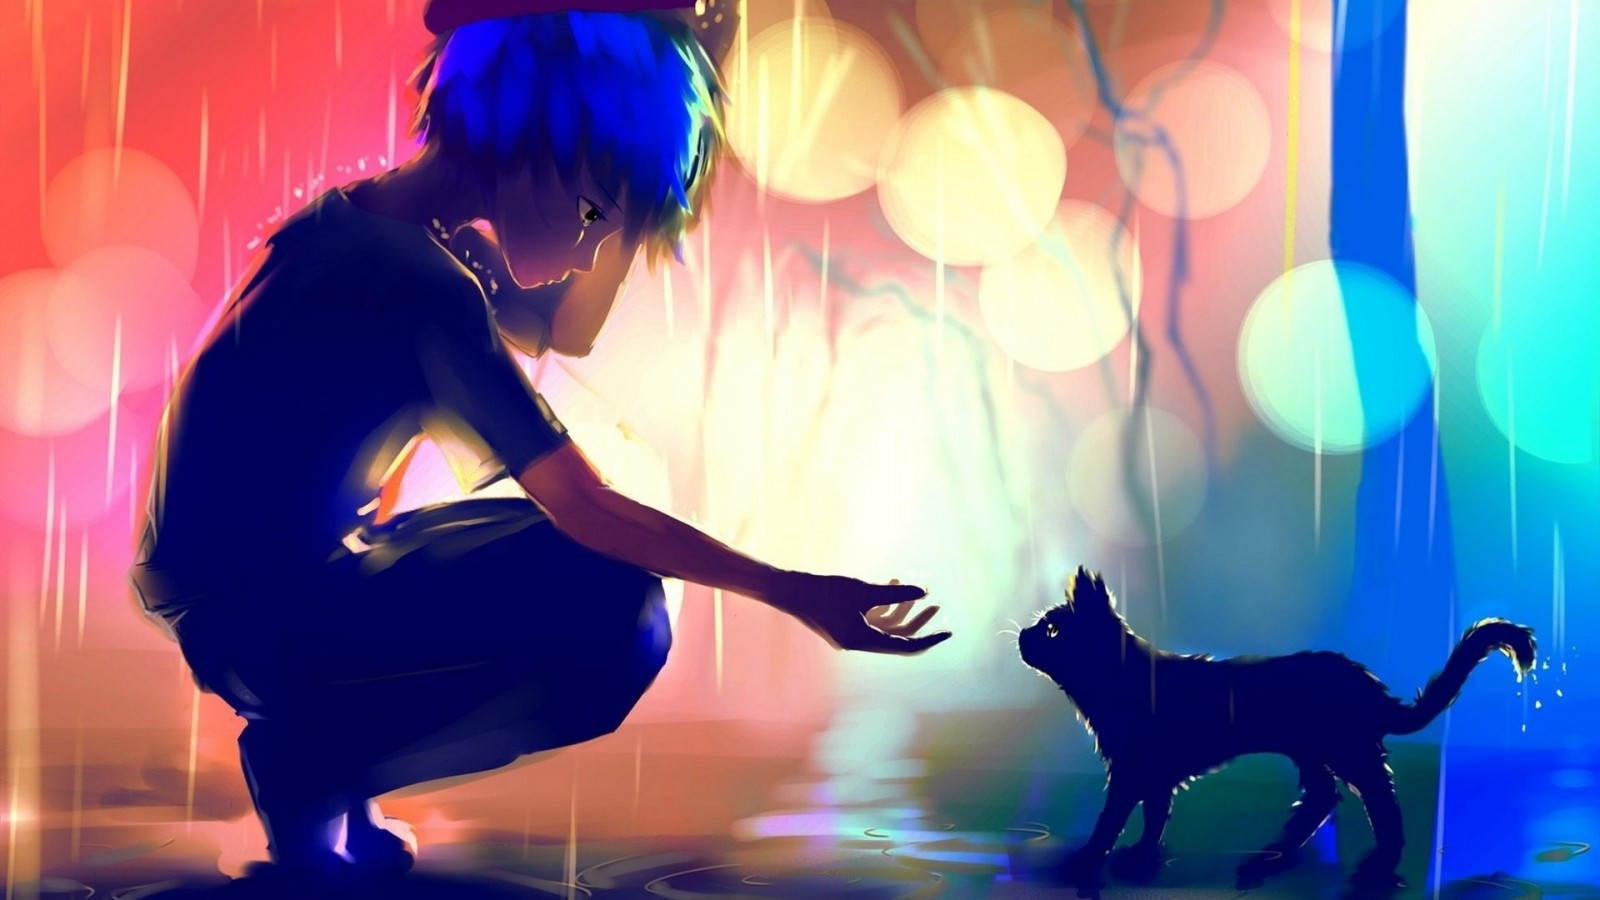 Download 1600x900 Anime Boy, Cat, Raining, Scenic, Sad, Loneliness Wallpaper